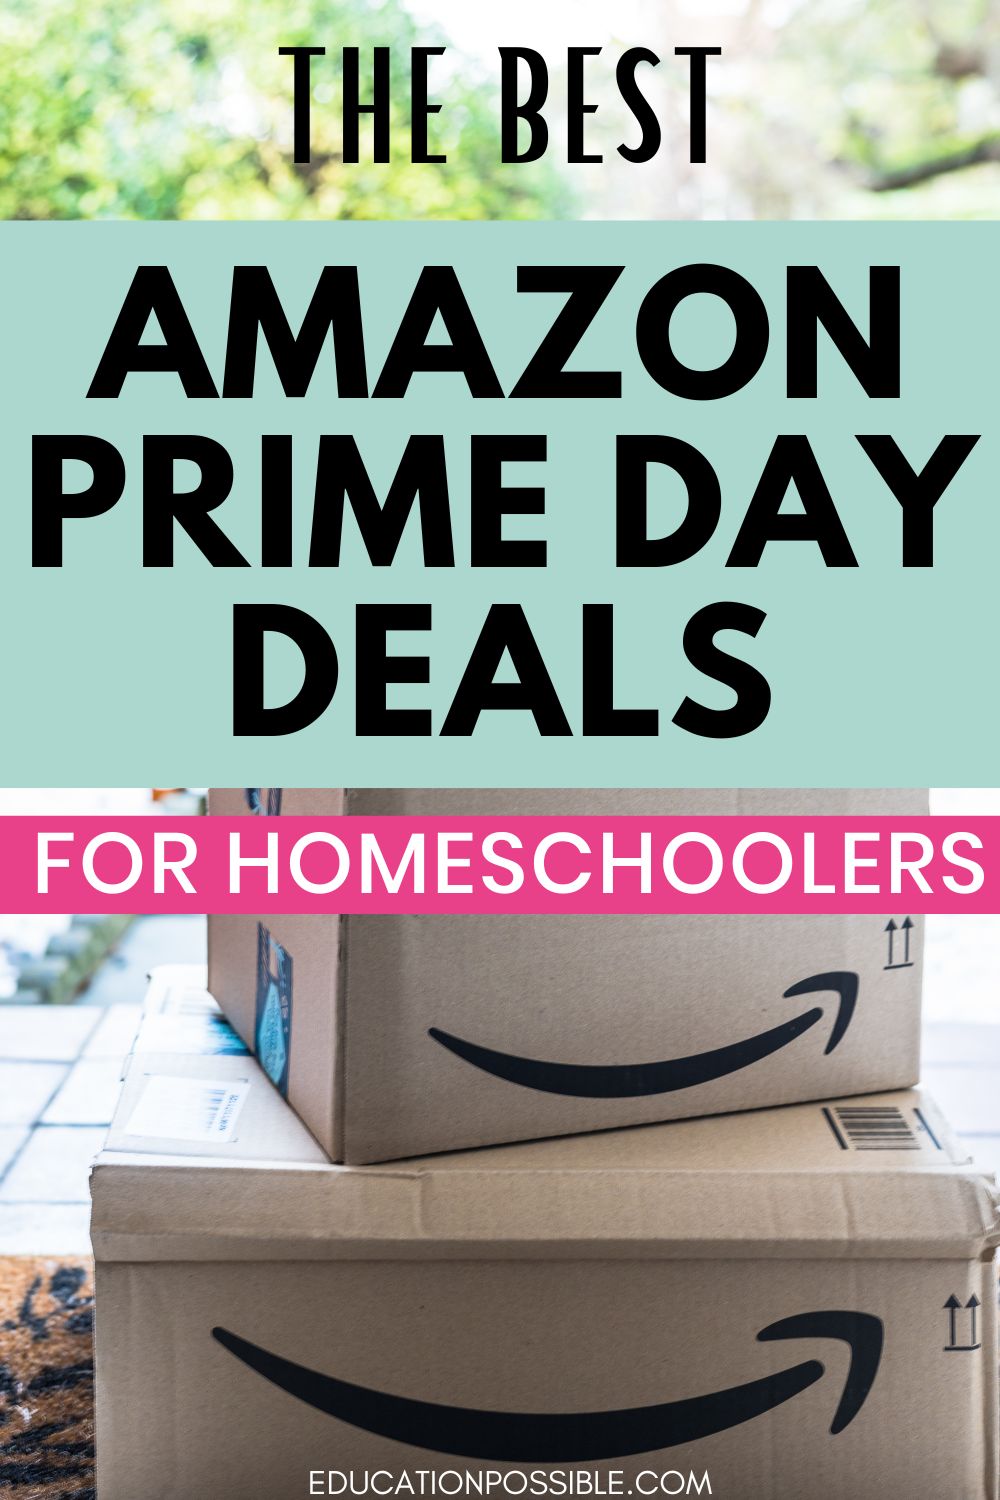 Amazon Prime Day Deals for Homeschoolers